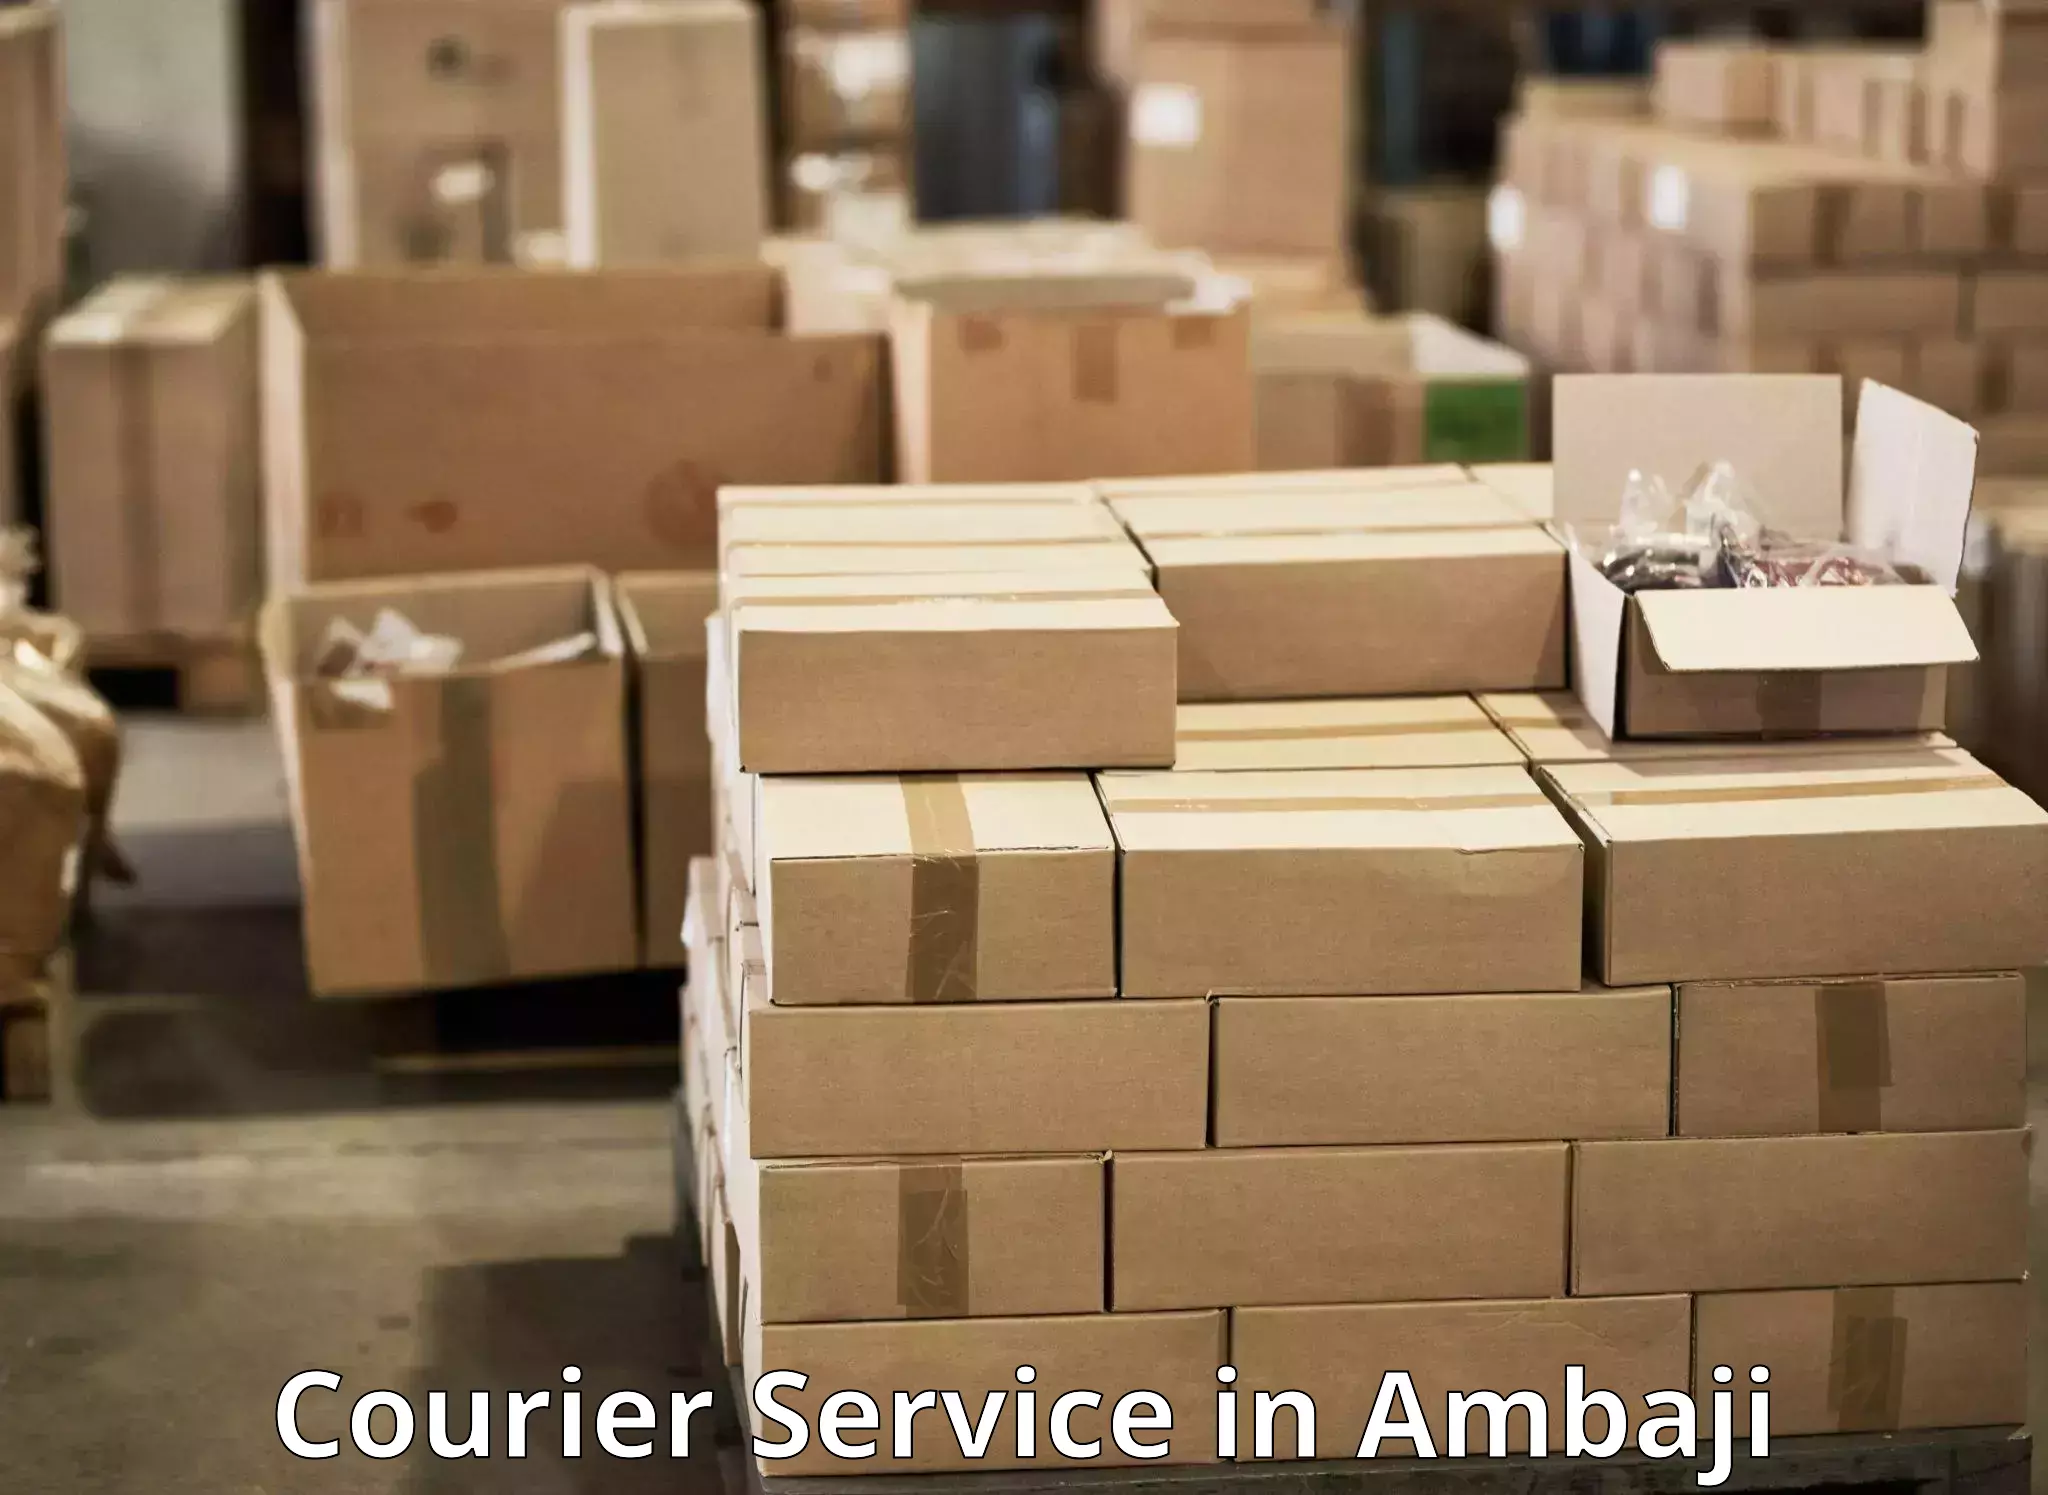 Enhanced shipping experience in Ambaji